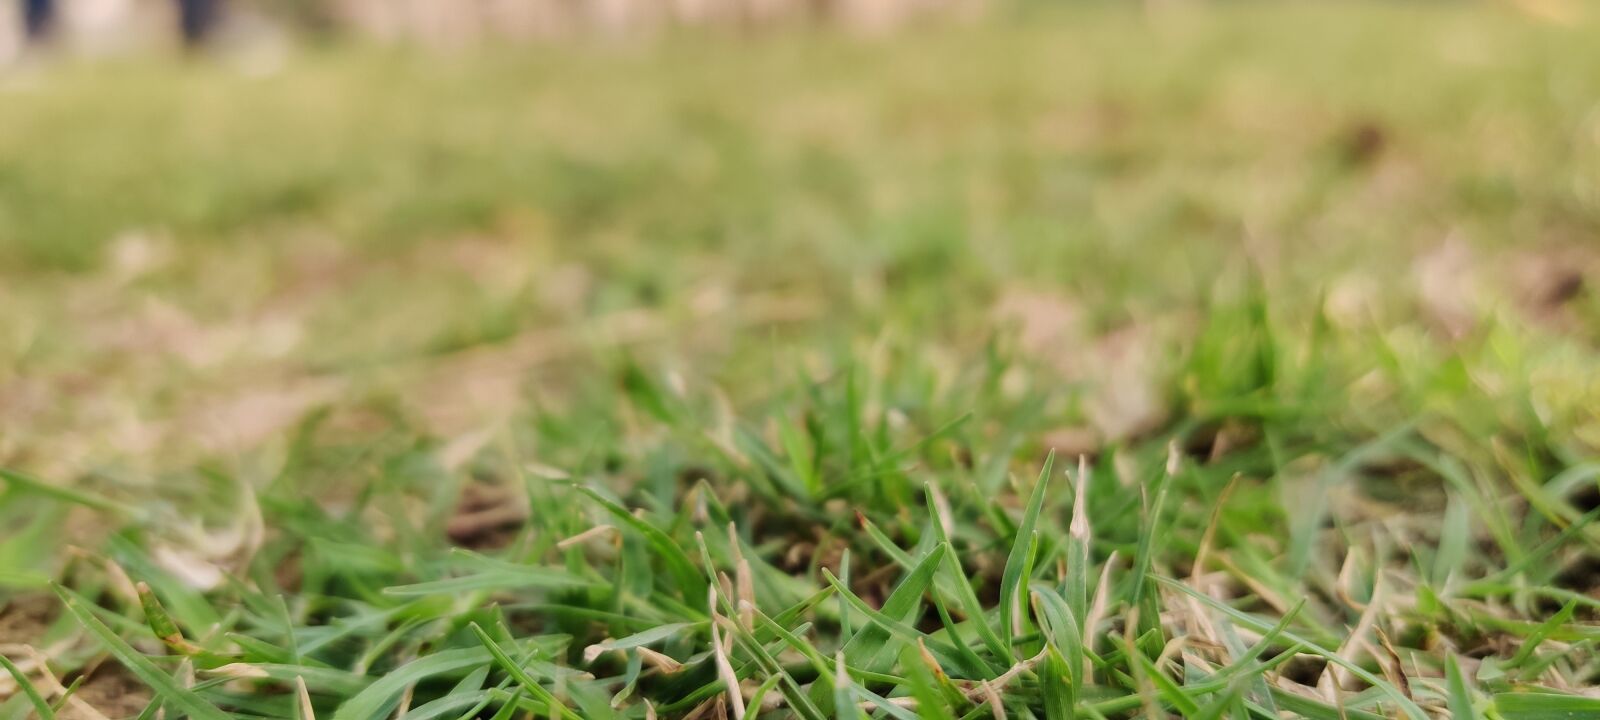 OnePlus HD1901 sample photo. Grass, landscape, field photography